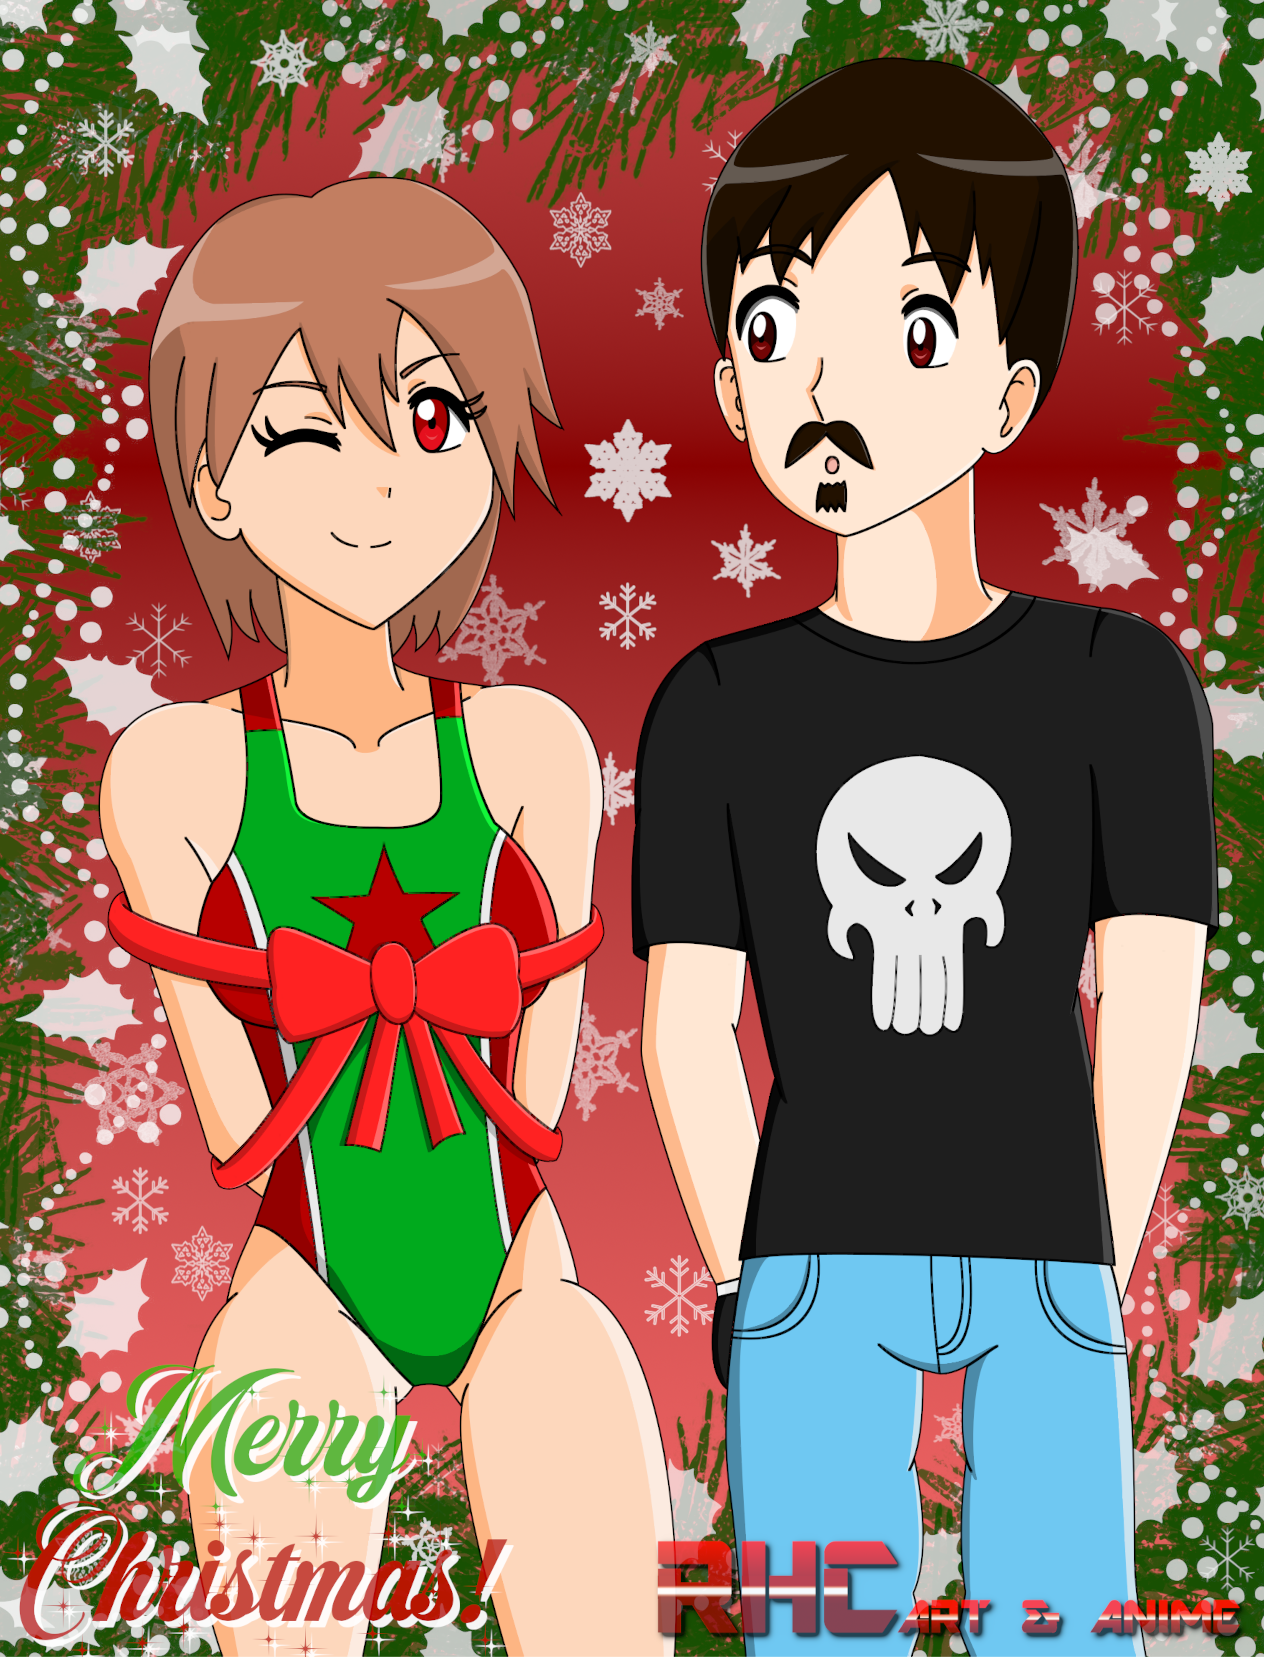 Noelle's Christmas gift to Ryoichi by RevolutionHellCowboy